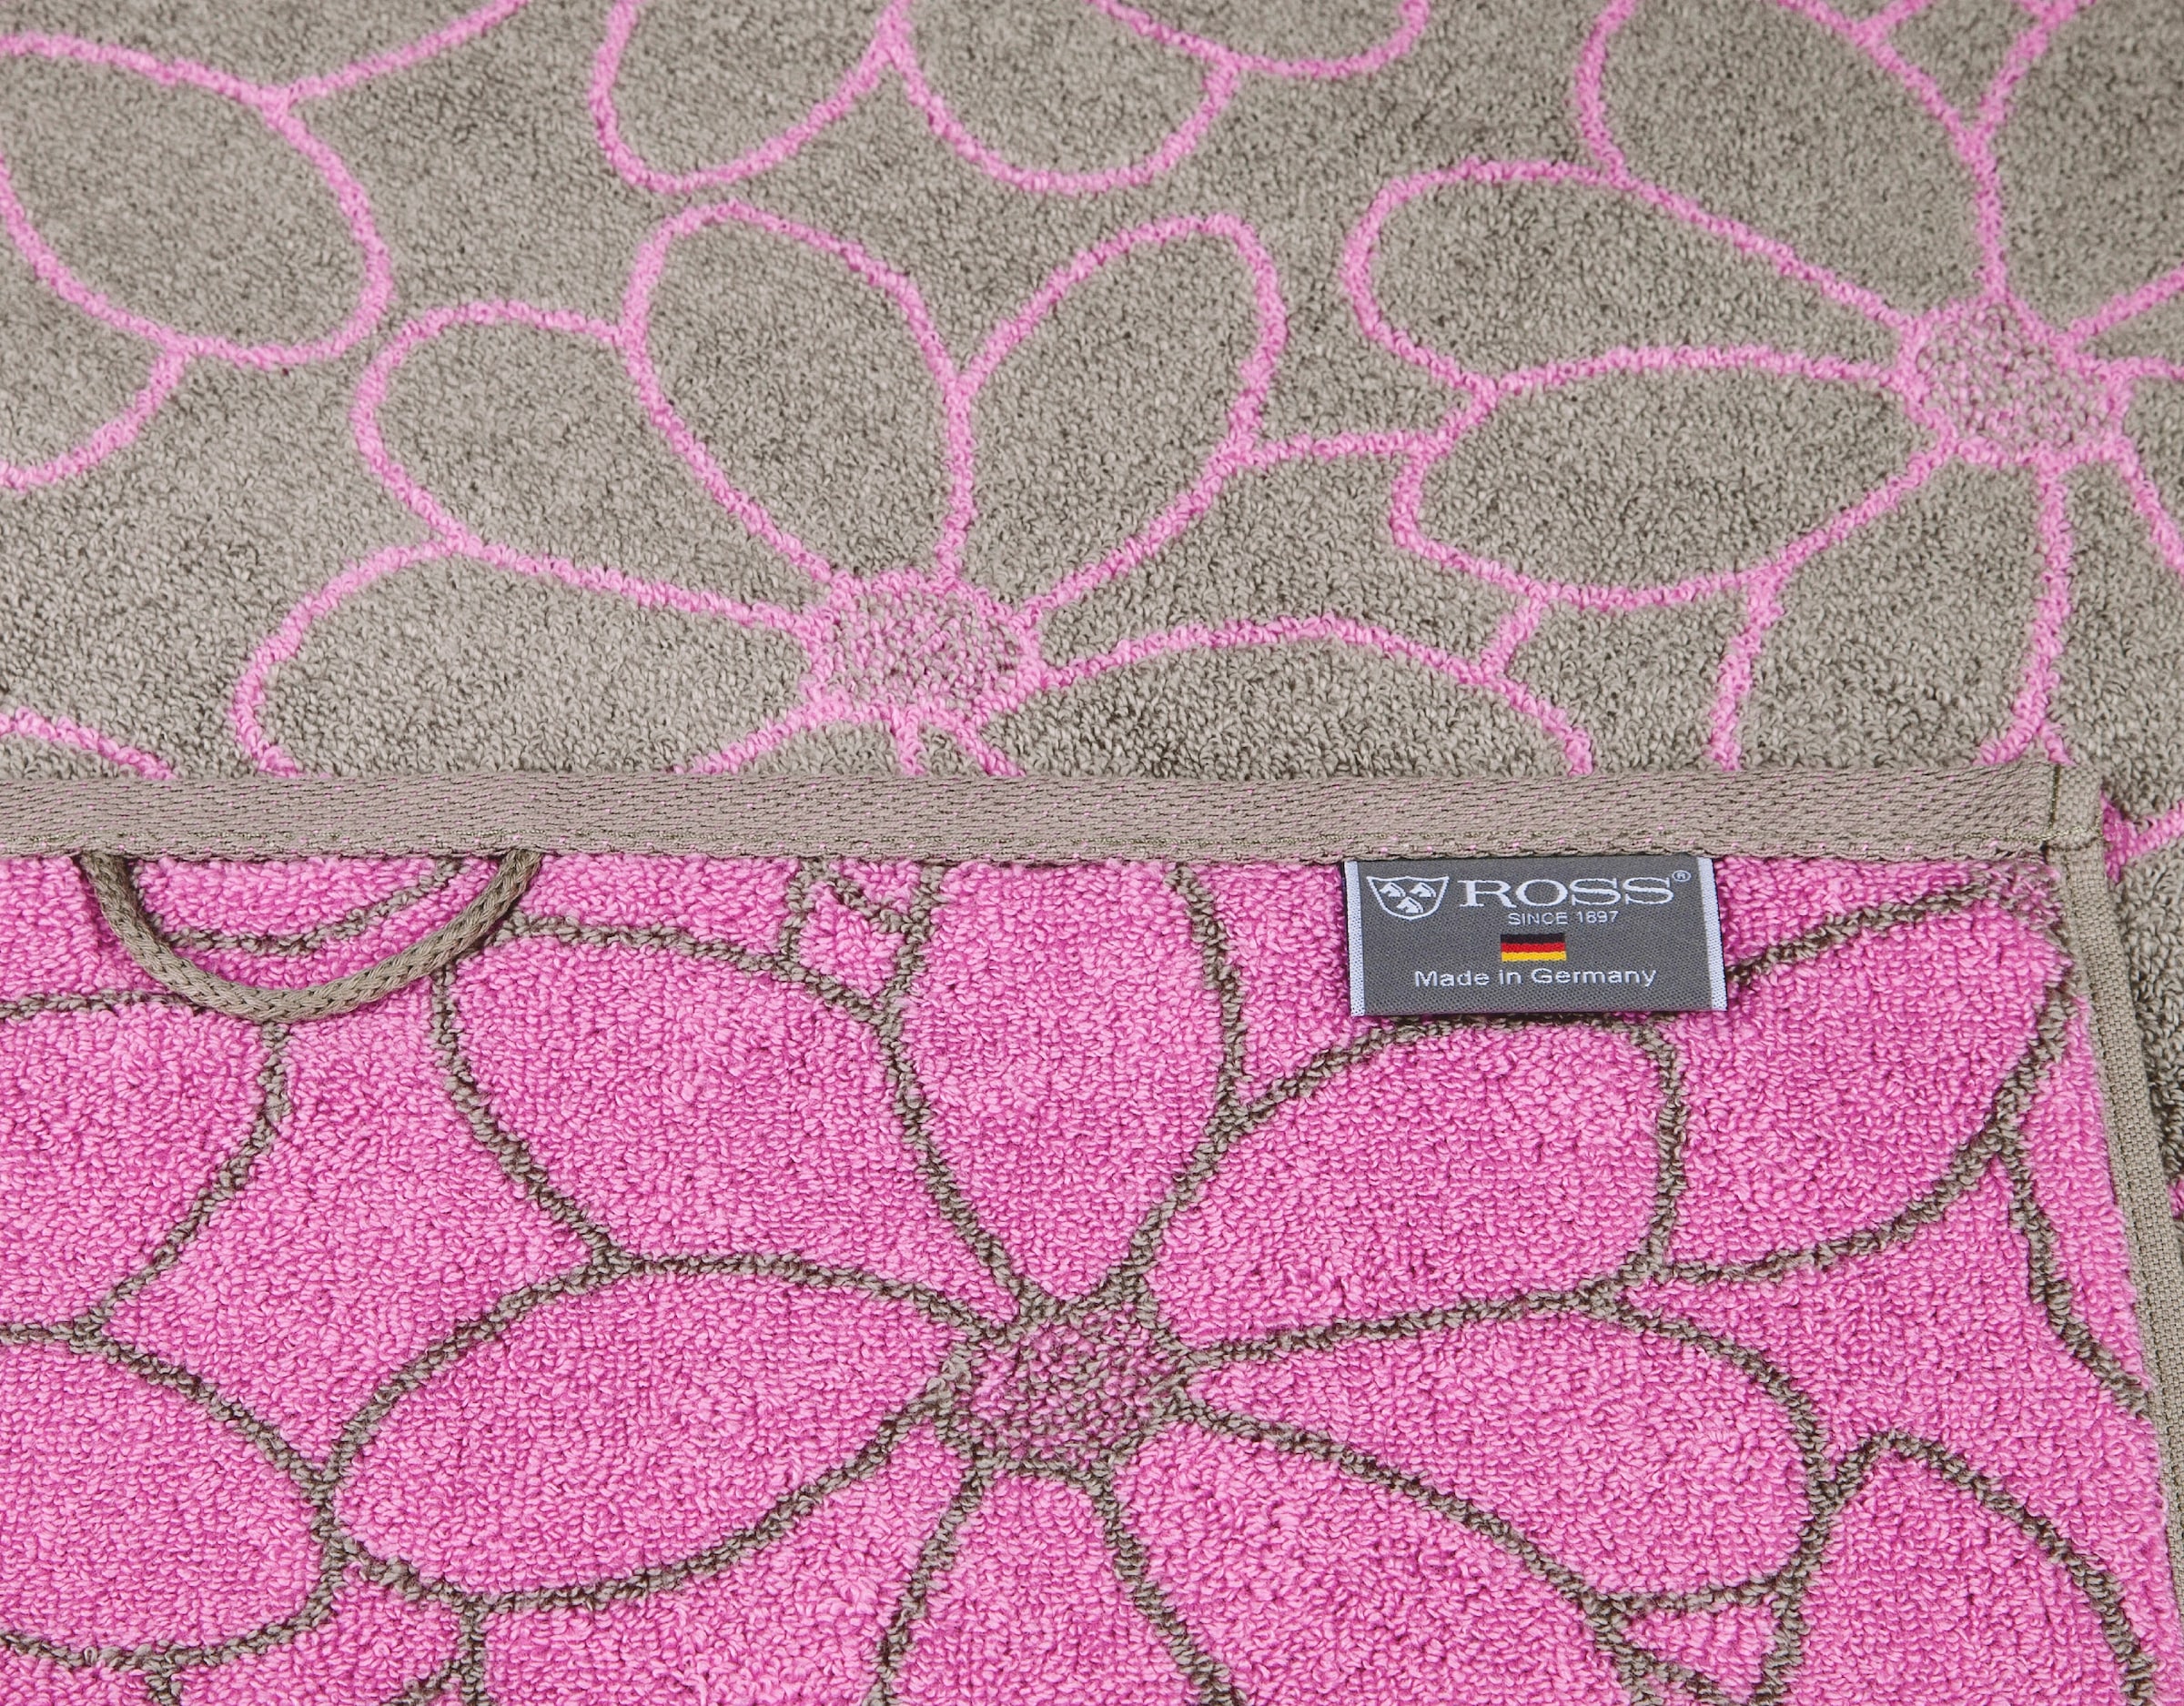 ROSS Badetuch »Blütenfond«, (1 Mako-Baumwolle bei OTTO St.), aus feinster